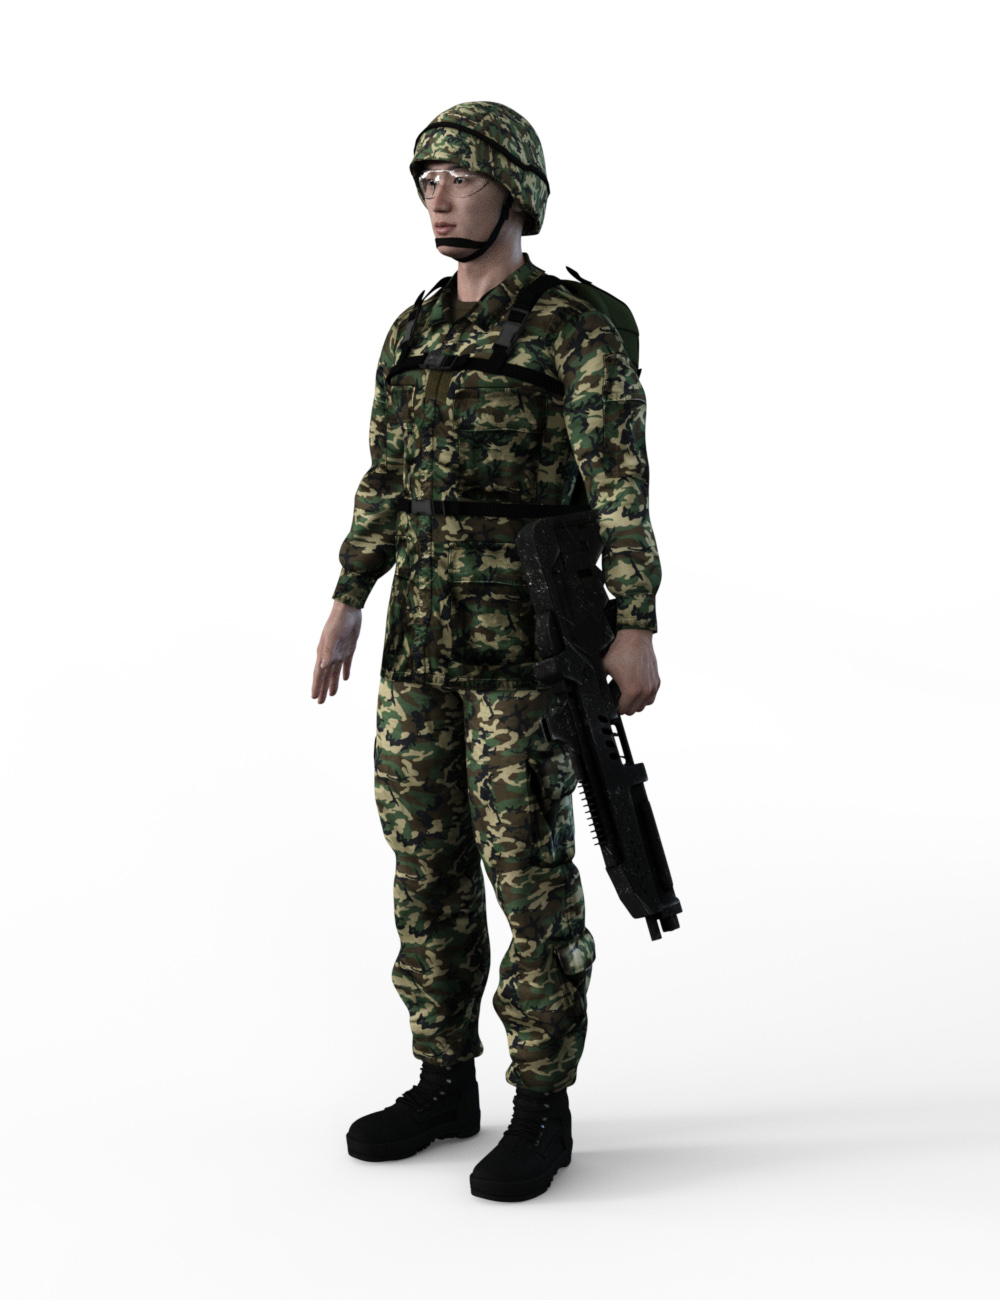 FBX- Lee Army Uniform by: Paleo, 3D Models by Daz 3D